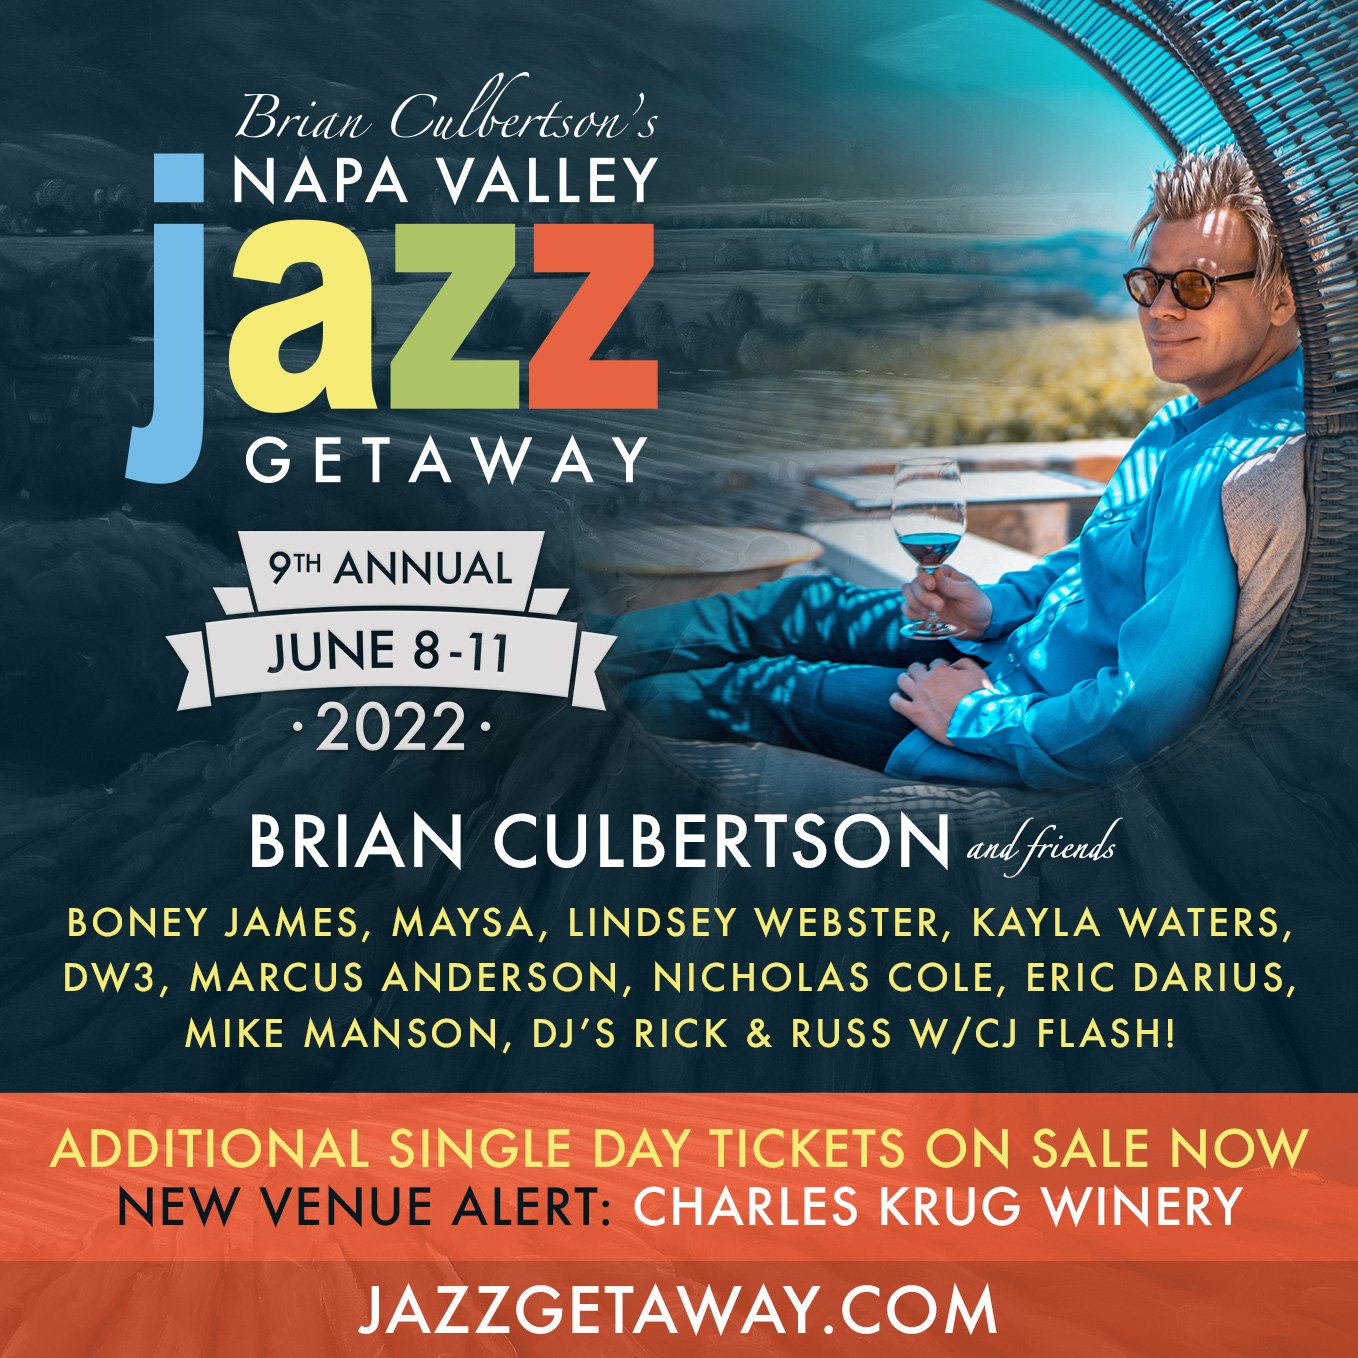 Napa Valley Jazz Getaway at The Lincoln Theater at the Napa Valley